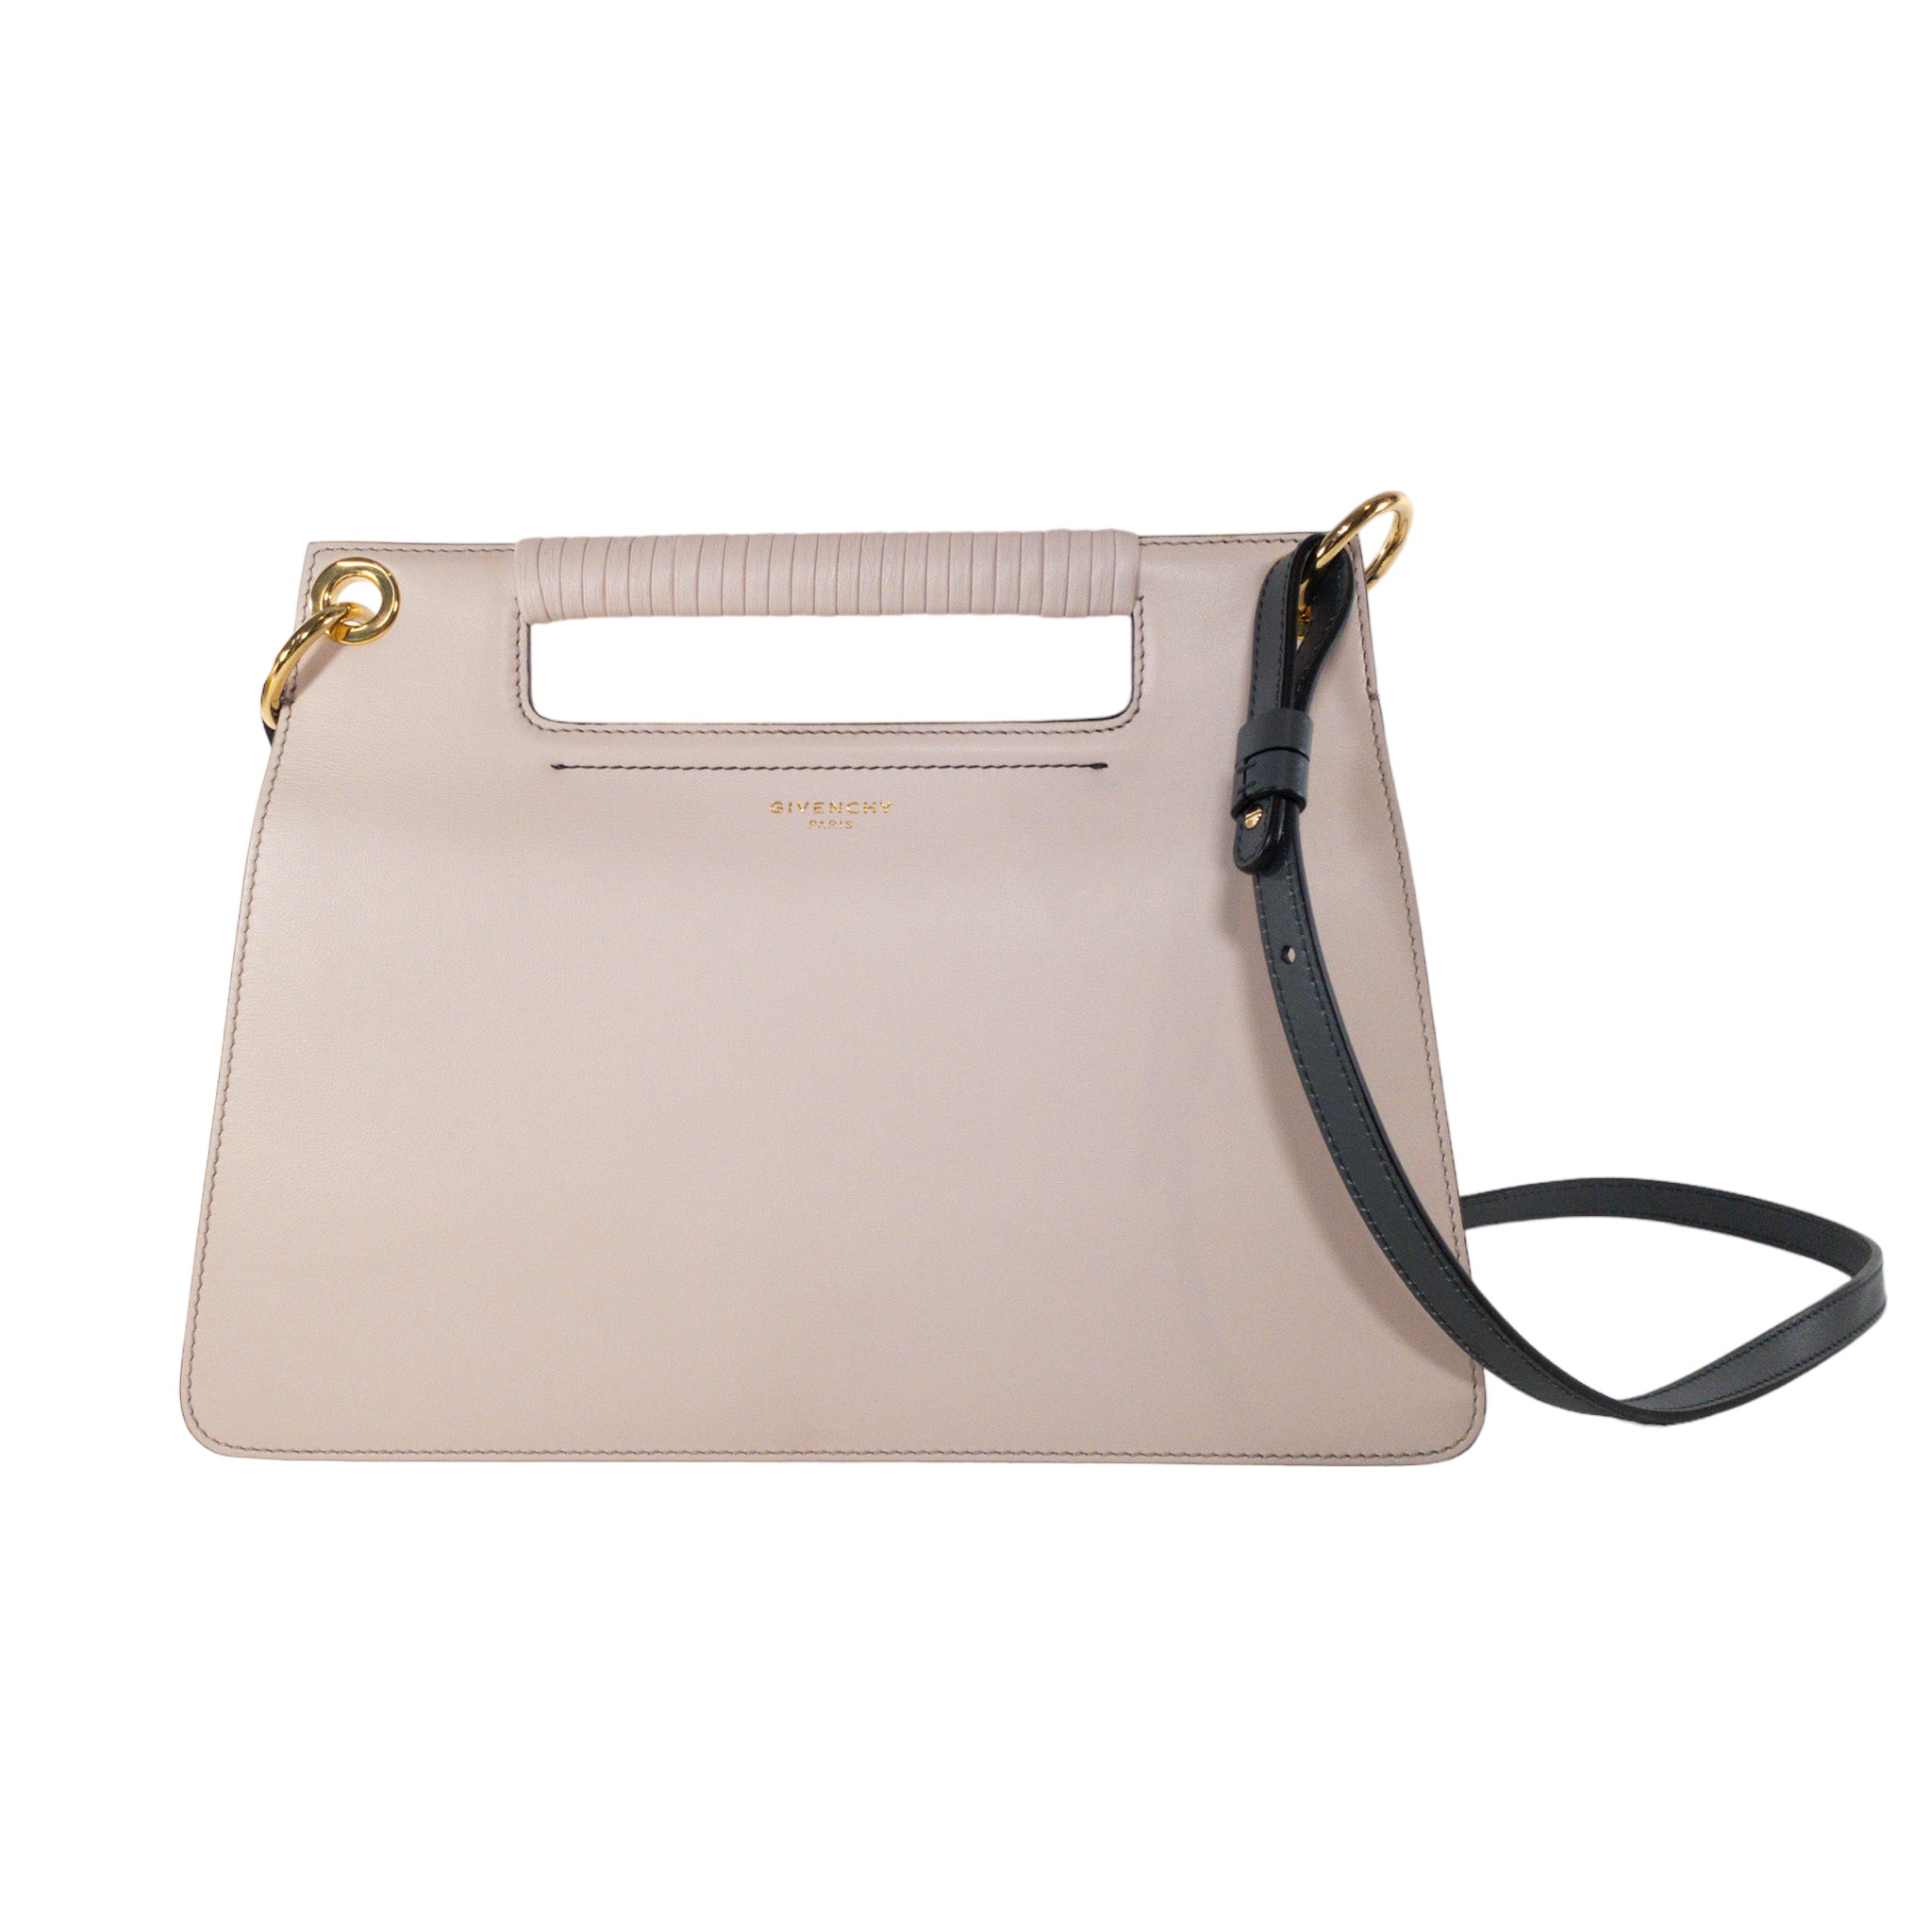 Givenchy Blush Whip Bag